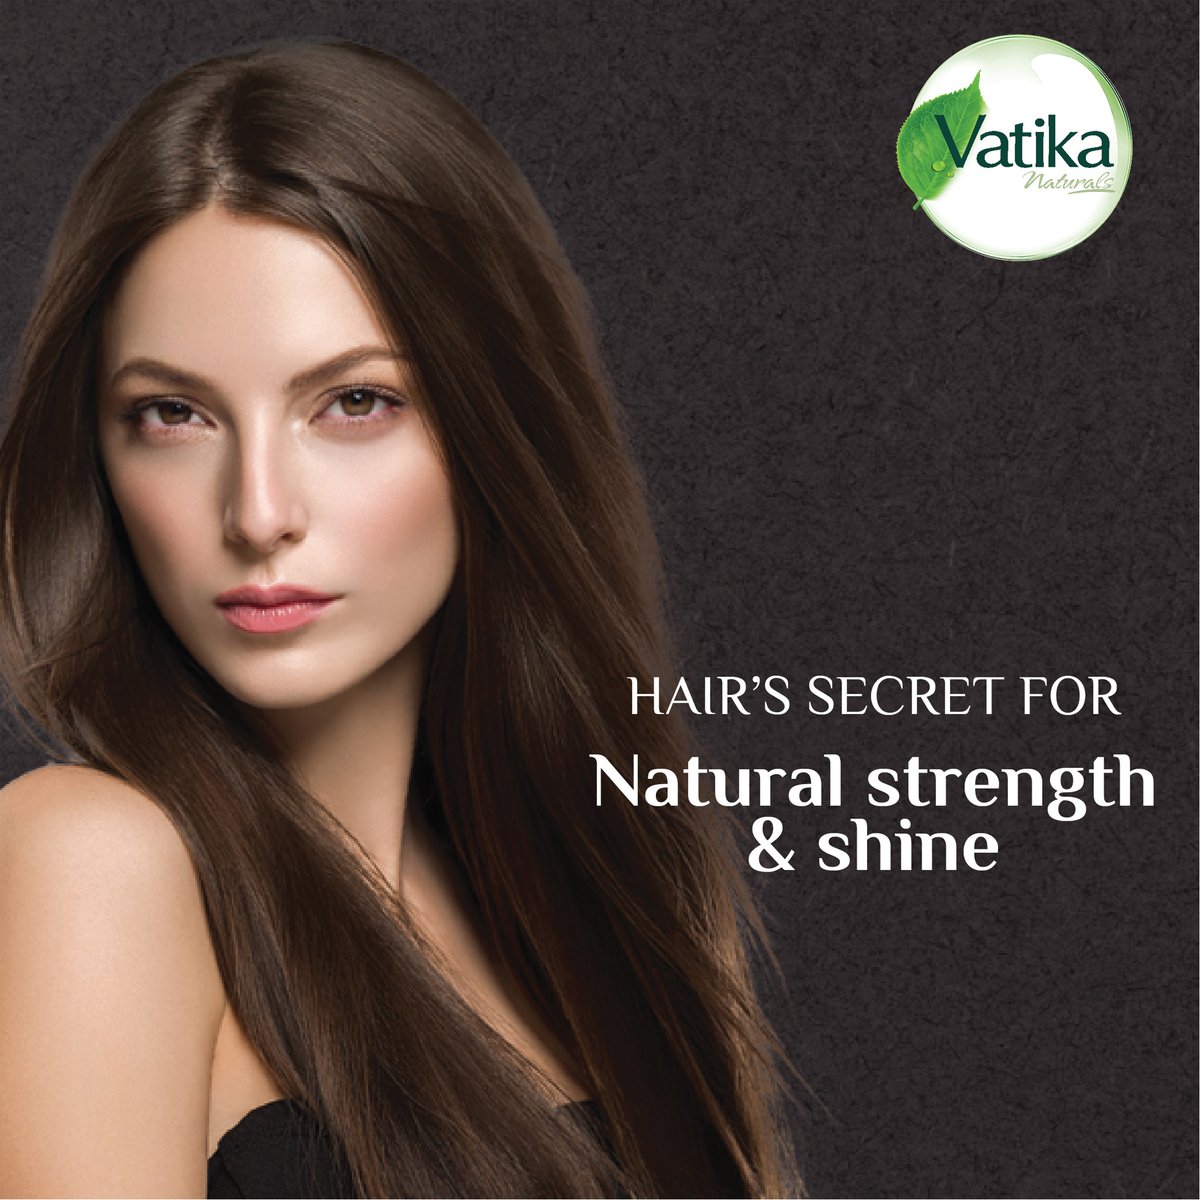 Vatika Naturals Turkish Black Seed Strength and Shine Shampoo For Weak, Dull Hair 400 ml